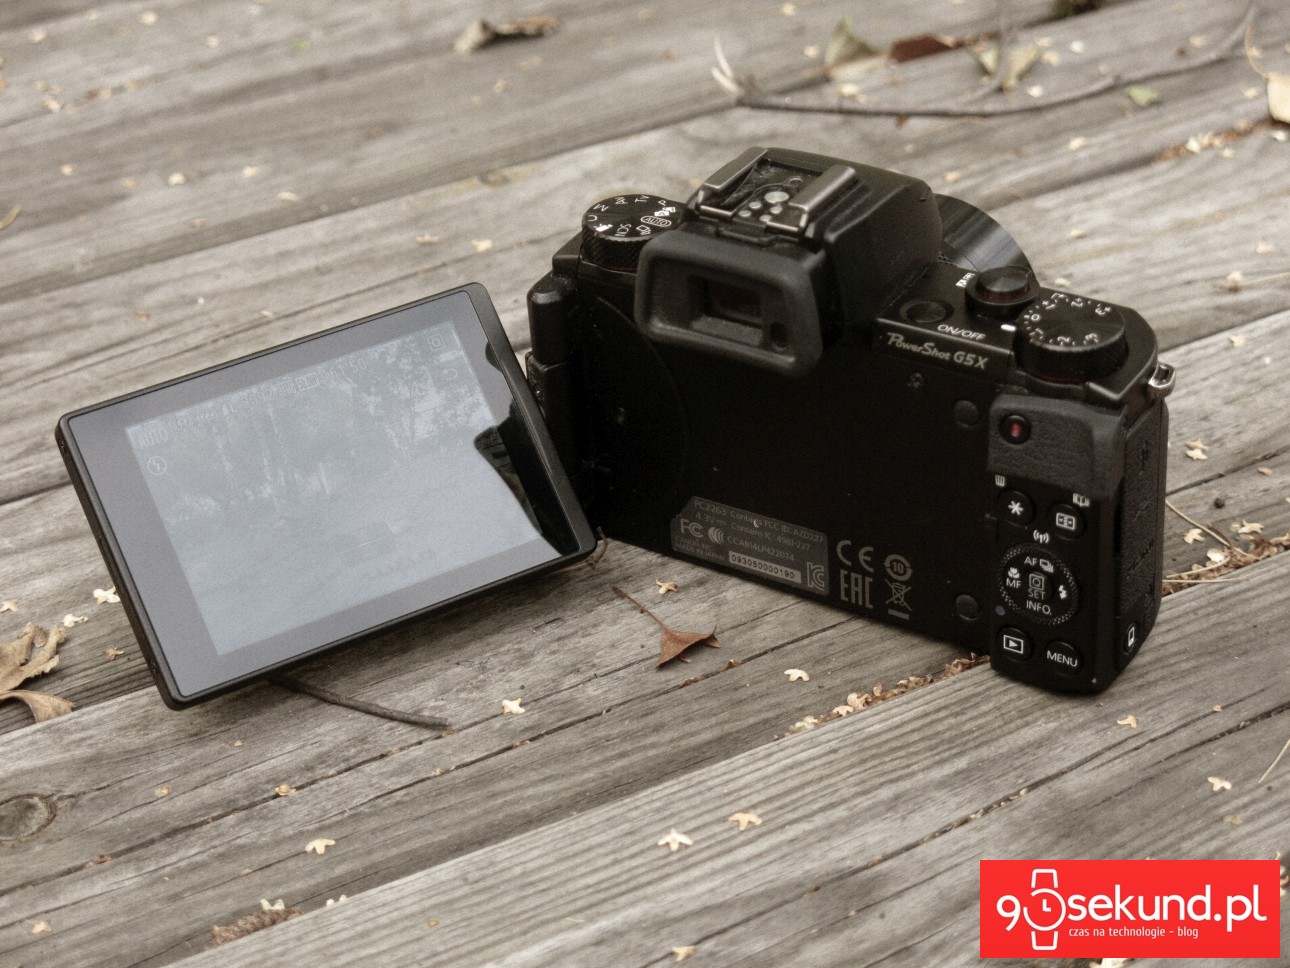 Canon PowerShot G5 X - recenzja 90sekund.pl